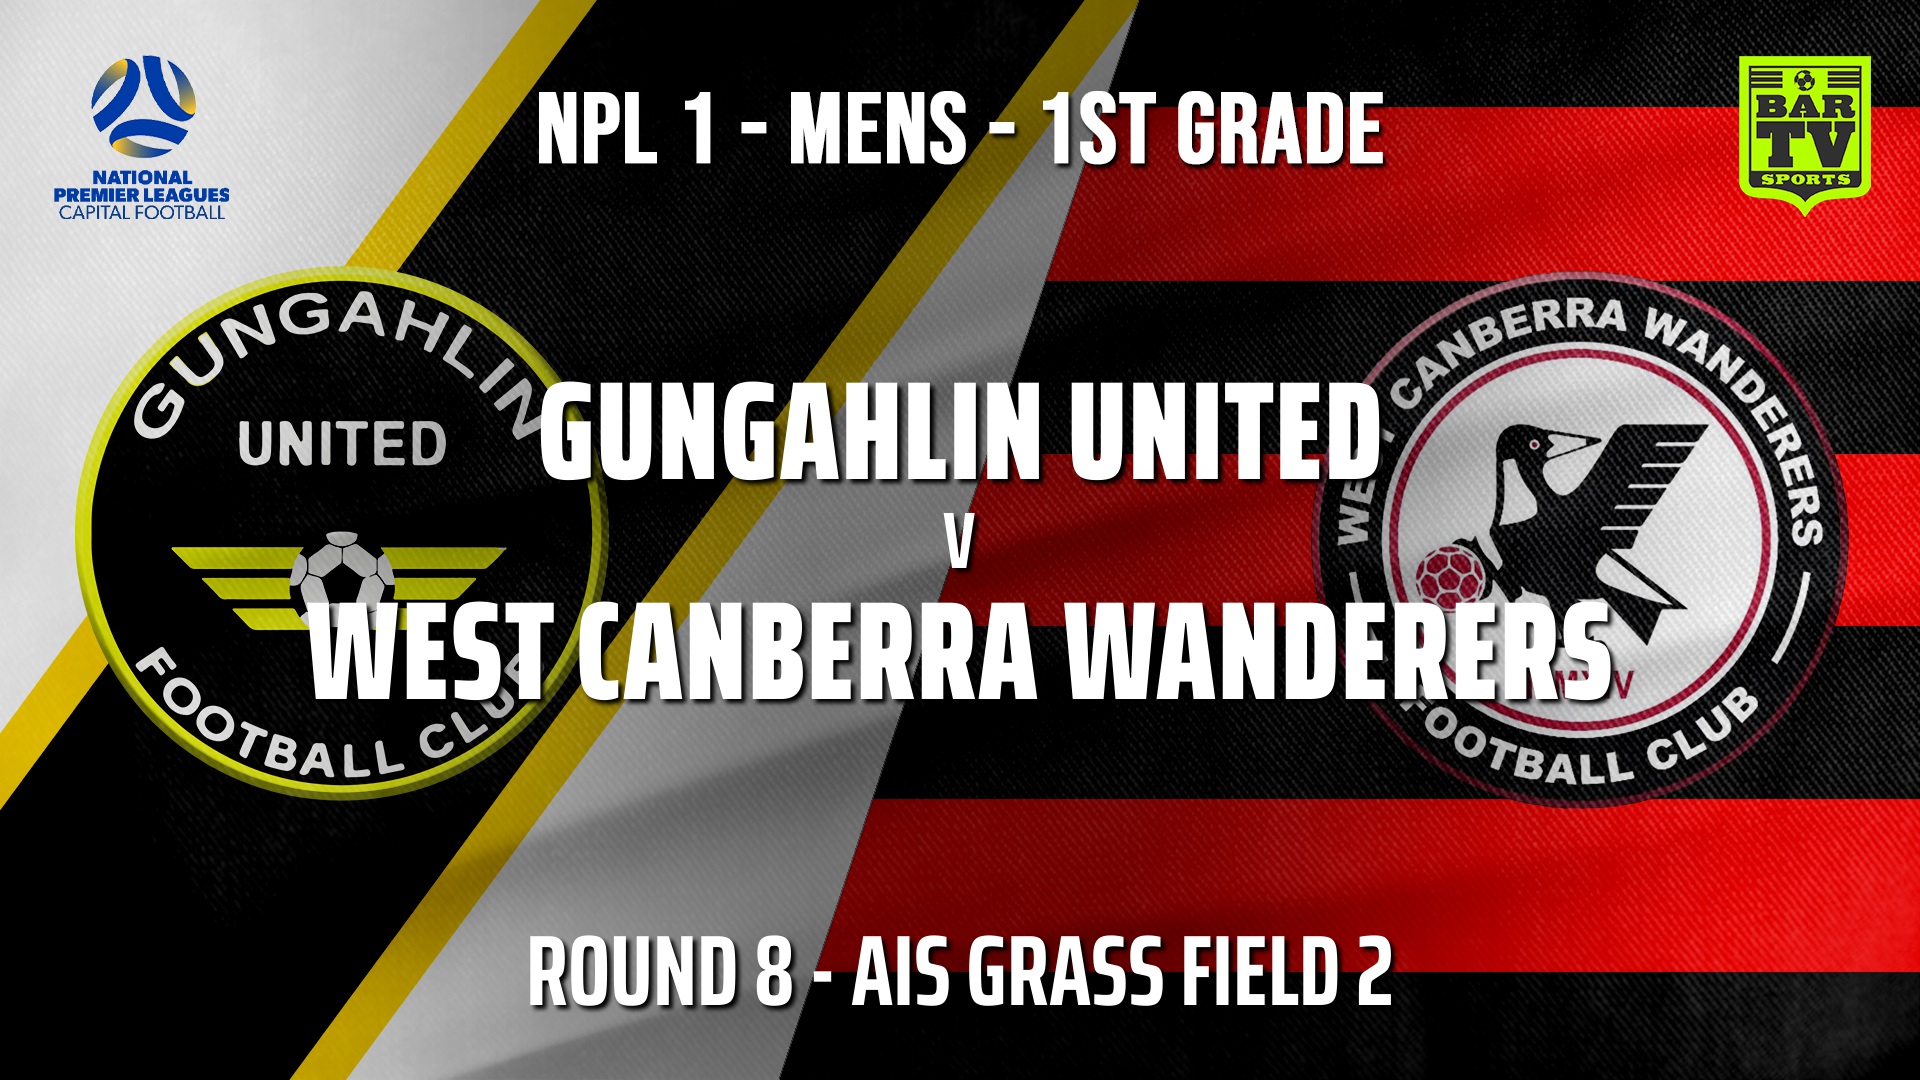 Npl Capital Round 8 Gungahlin United Fc V West Canberra Wanderers Live Video Scores